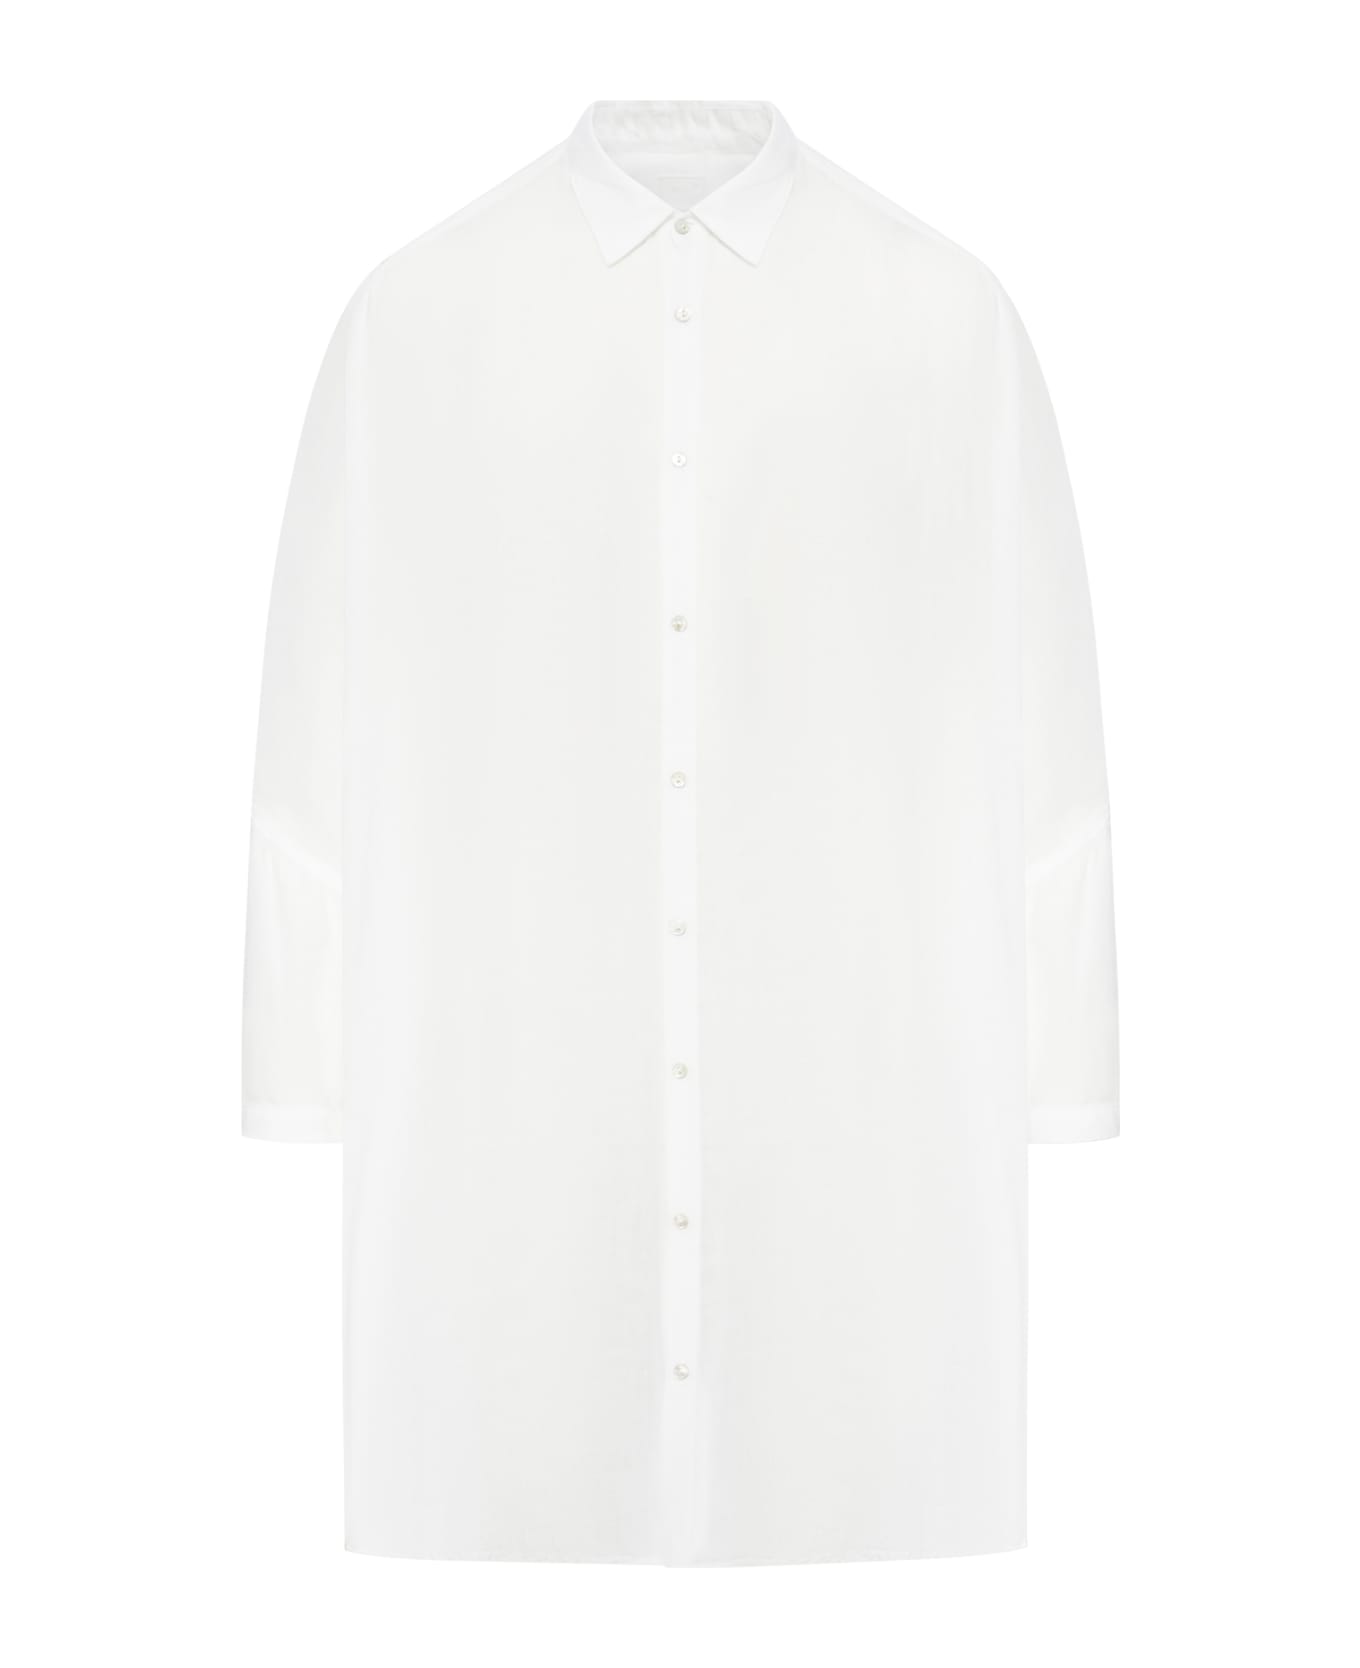 120% Lino Short Sleeve Woman Shirt - White